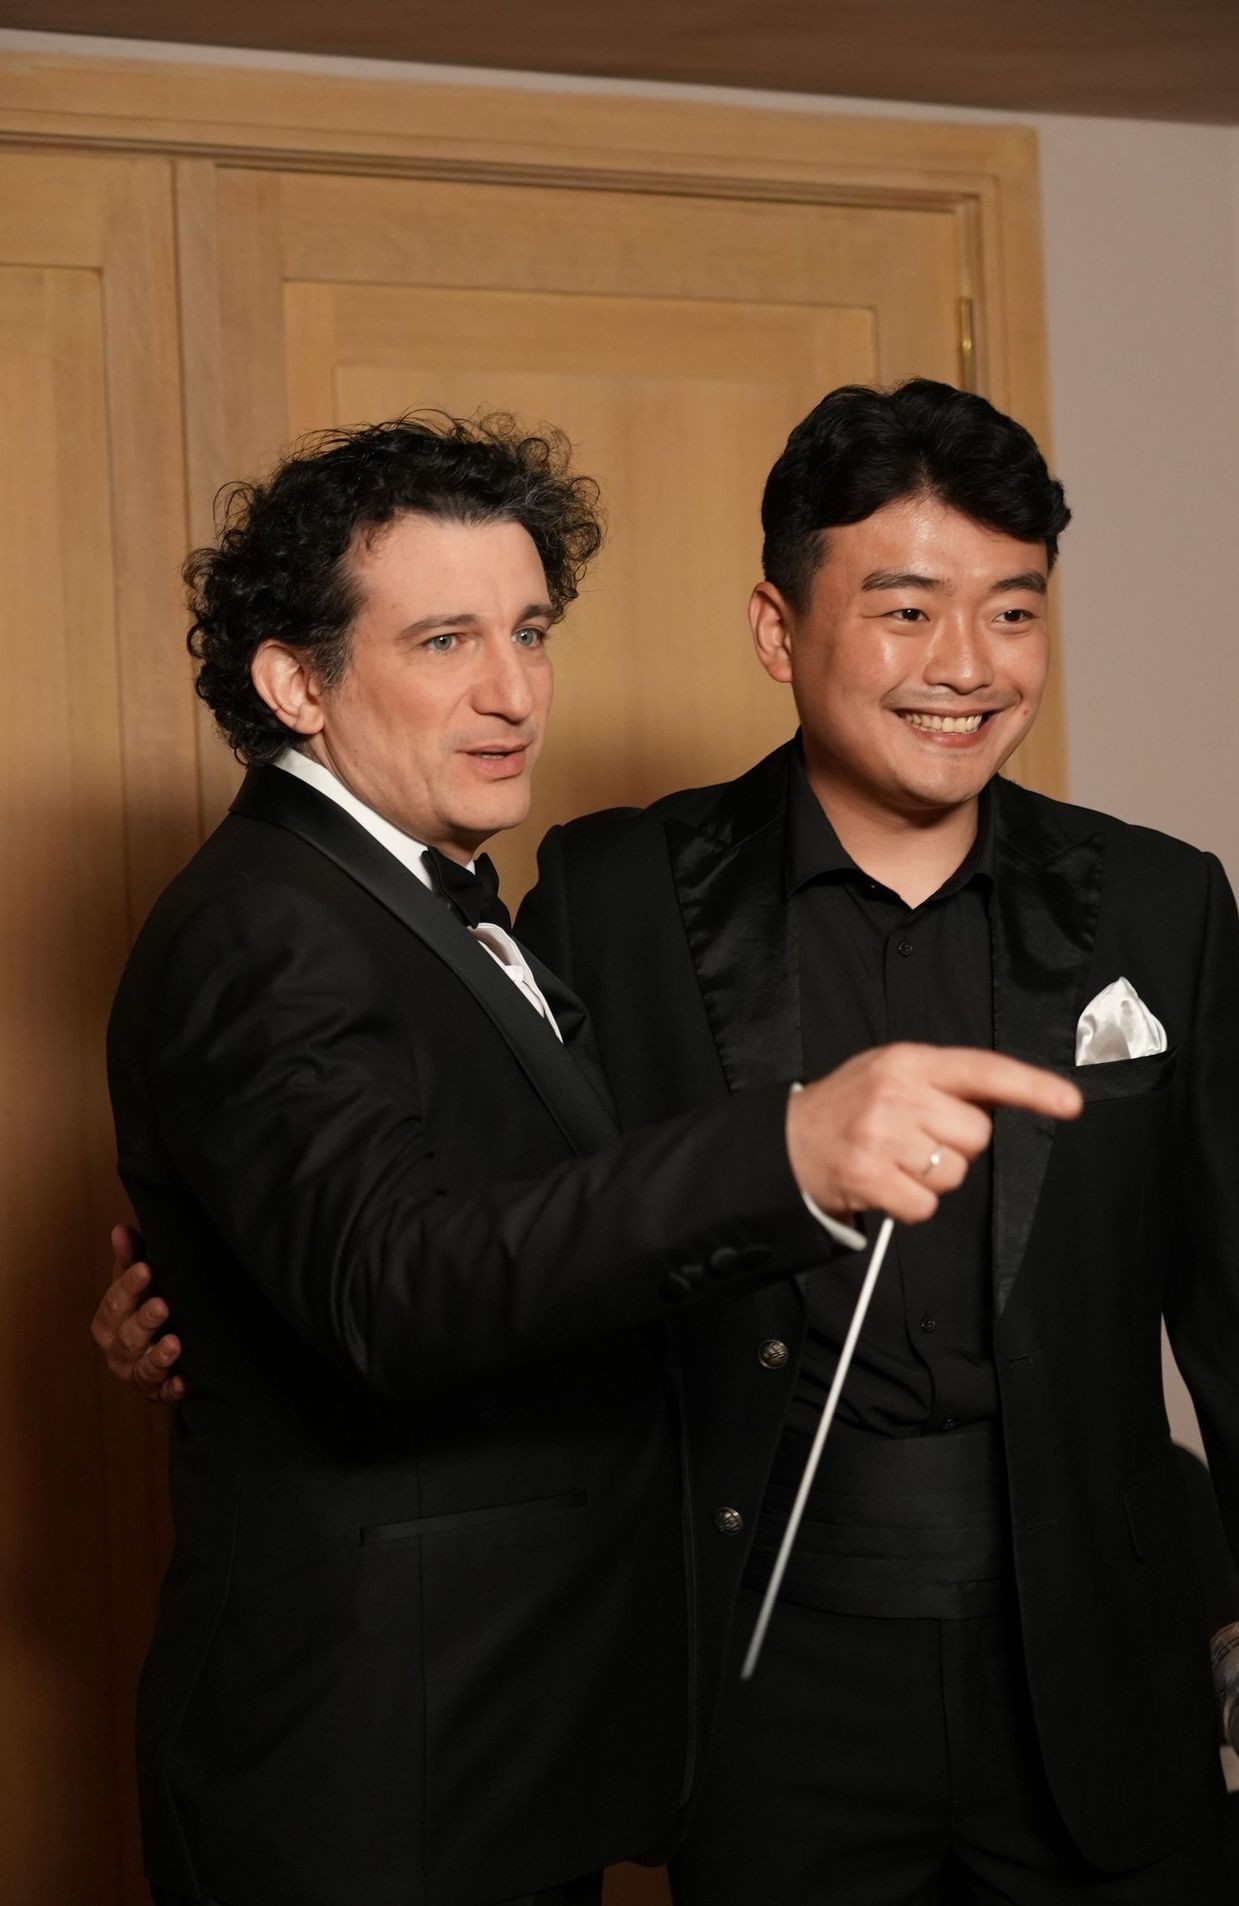 Le maestro Alain Altinoglu avec le finaliste Daniel Gwon